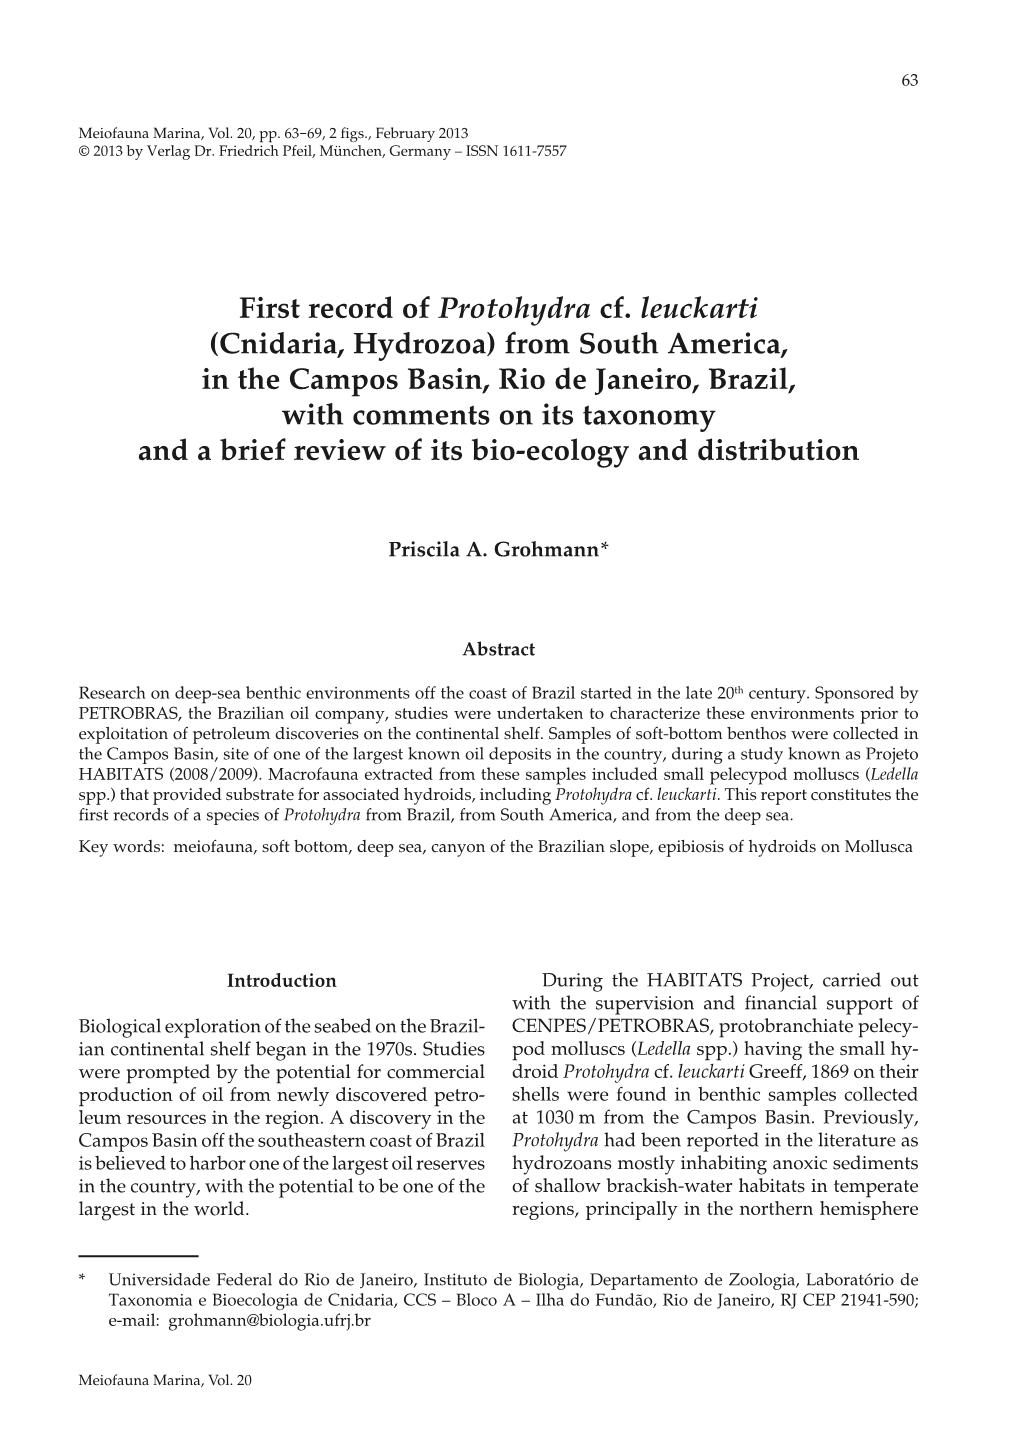 First Record of Protohydra Cf. Leuckarti (Cnidaria, Hydrozoa)